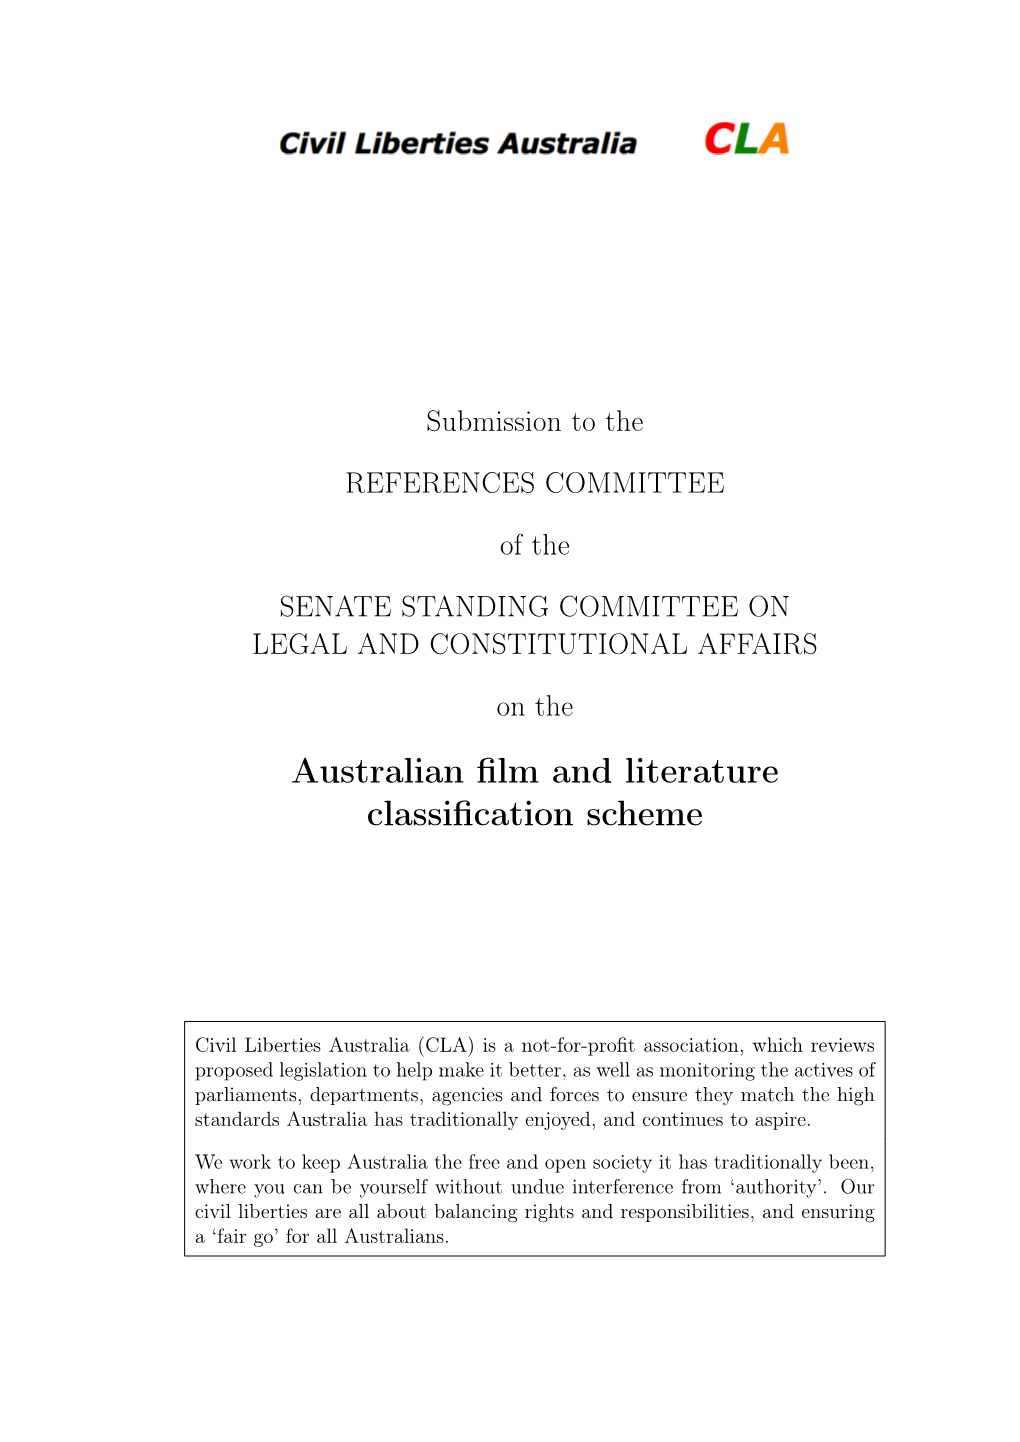 Australian Film and Literature Classification Scheme